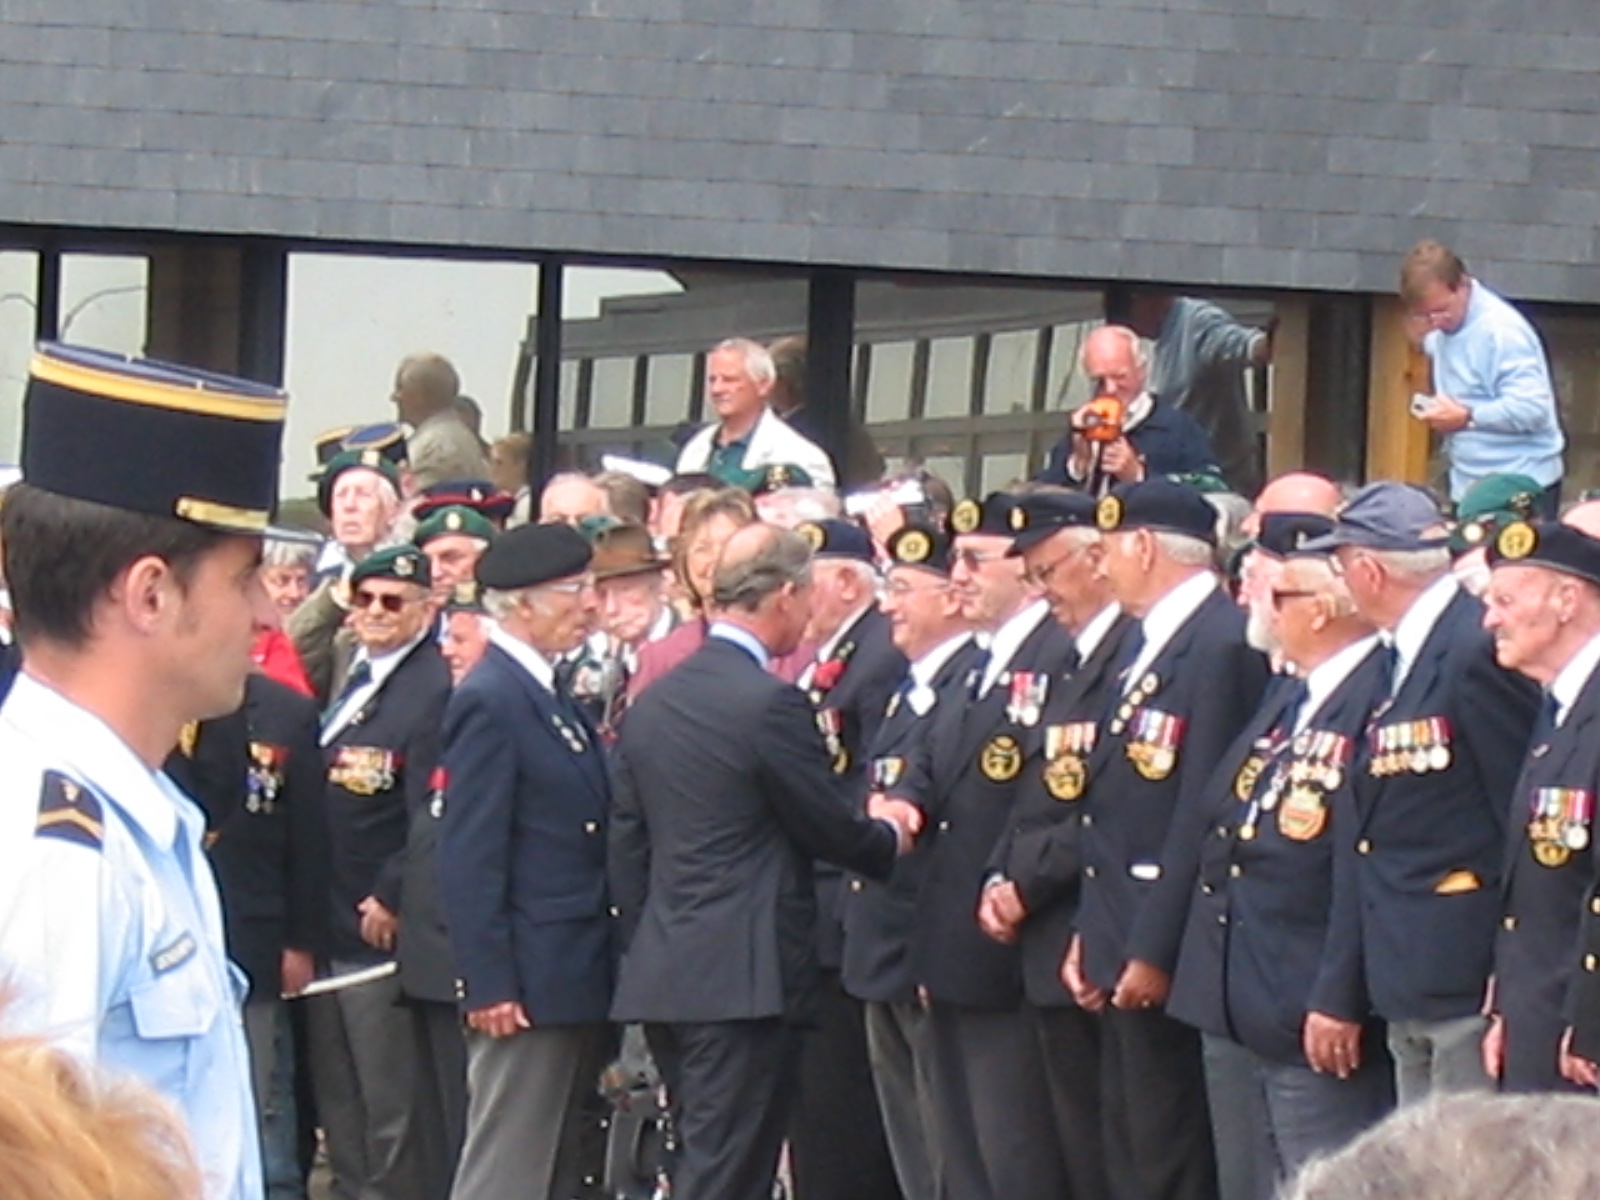 HRH Prince Charles greeting the Veterans